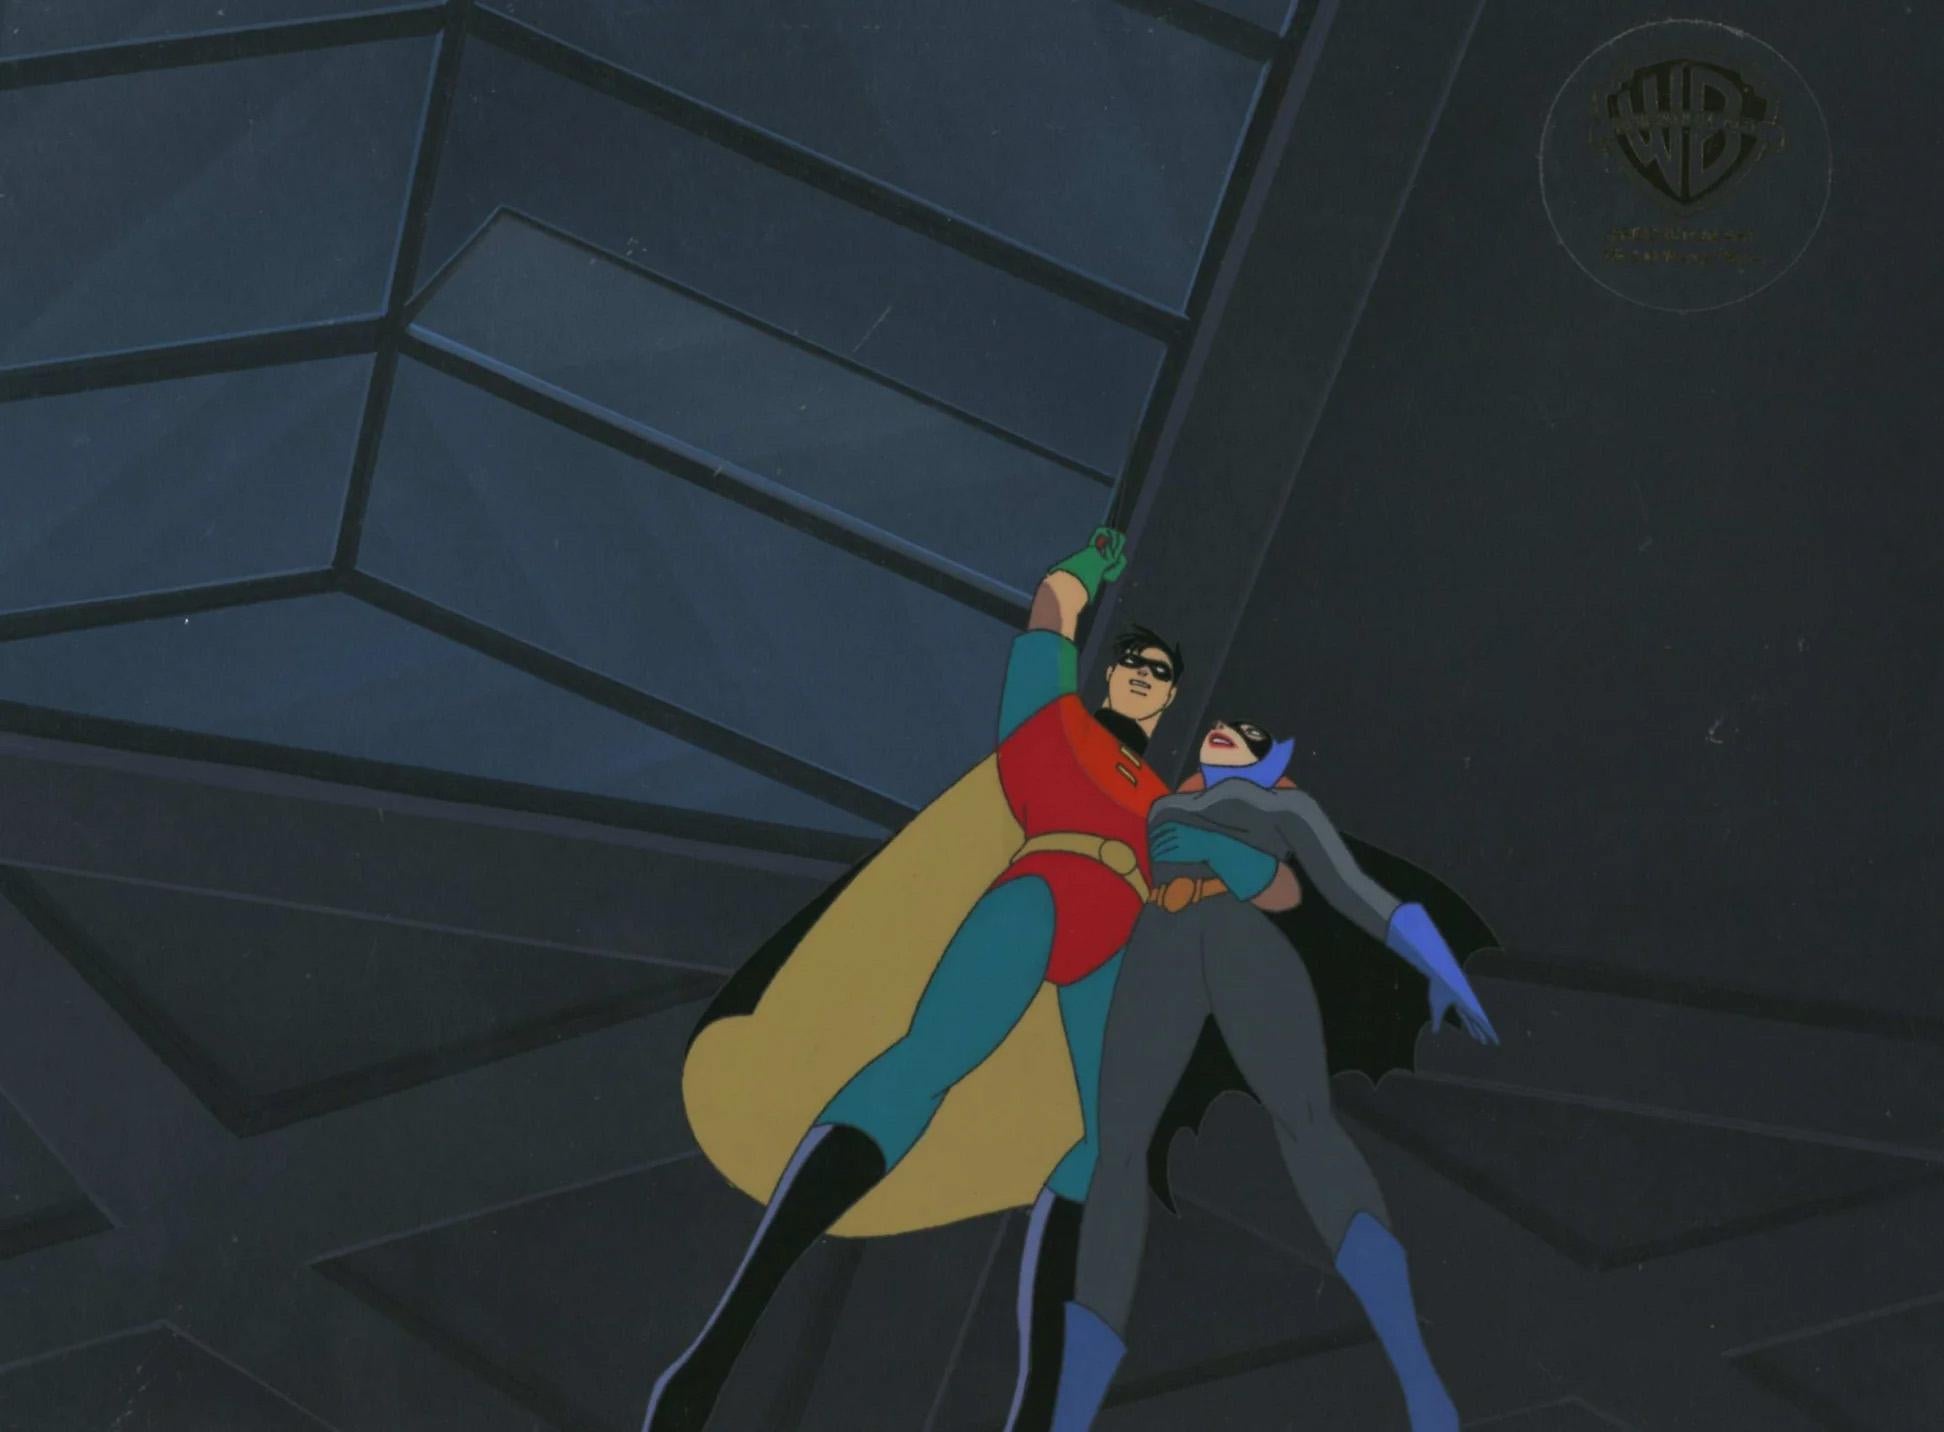 Batman The Animated Series Original Production Cel: Batgirl and Robin - Art by DC Comics Studio Artists